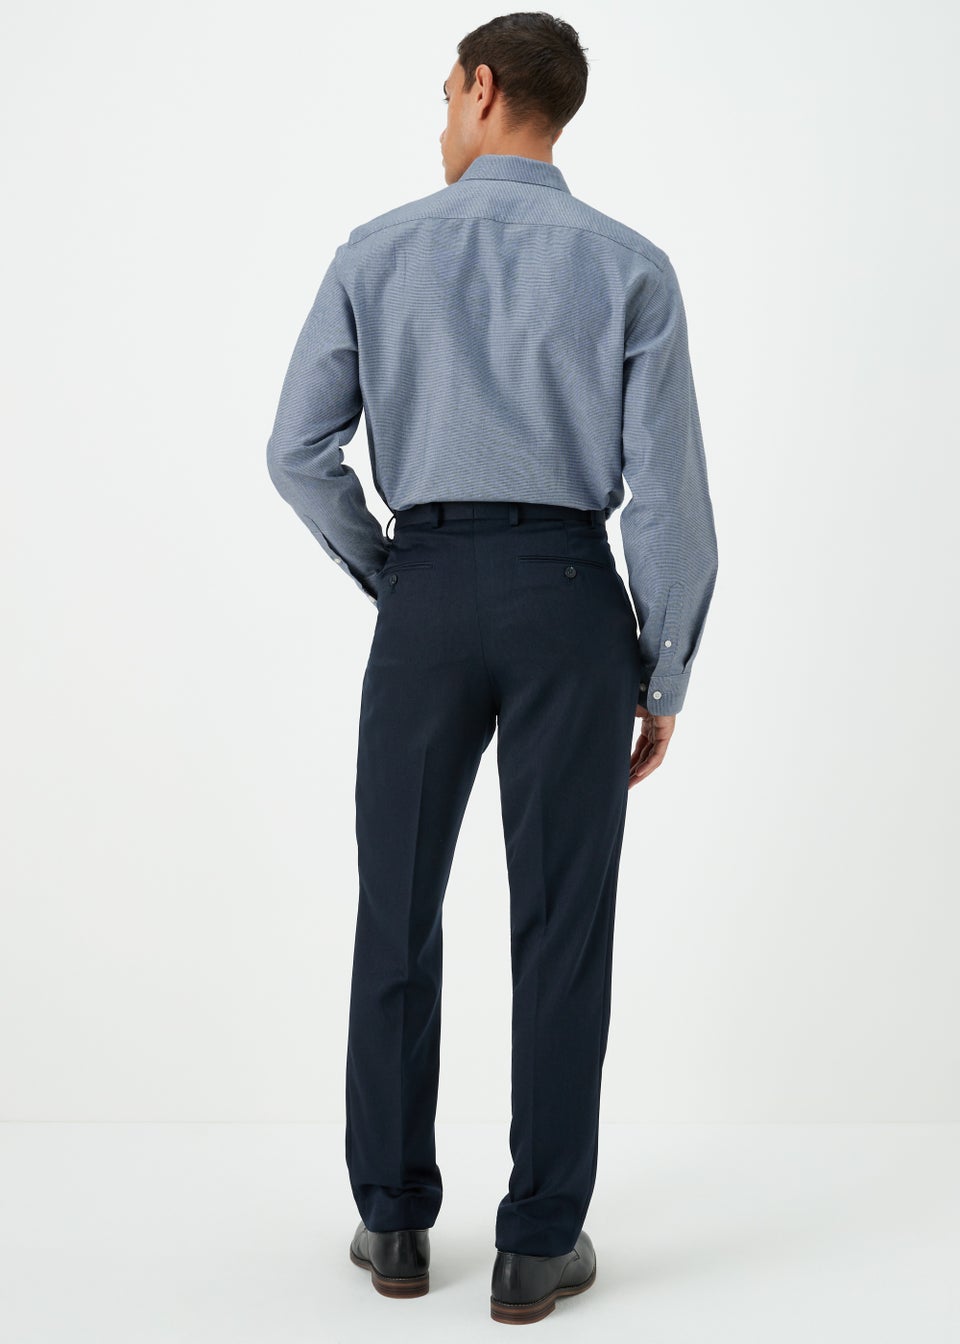 Taylor & Wright Navy Texture Regular Fit Shirt